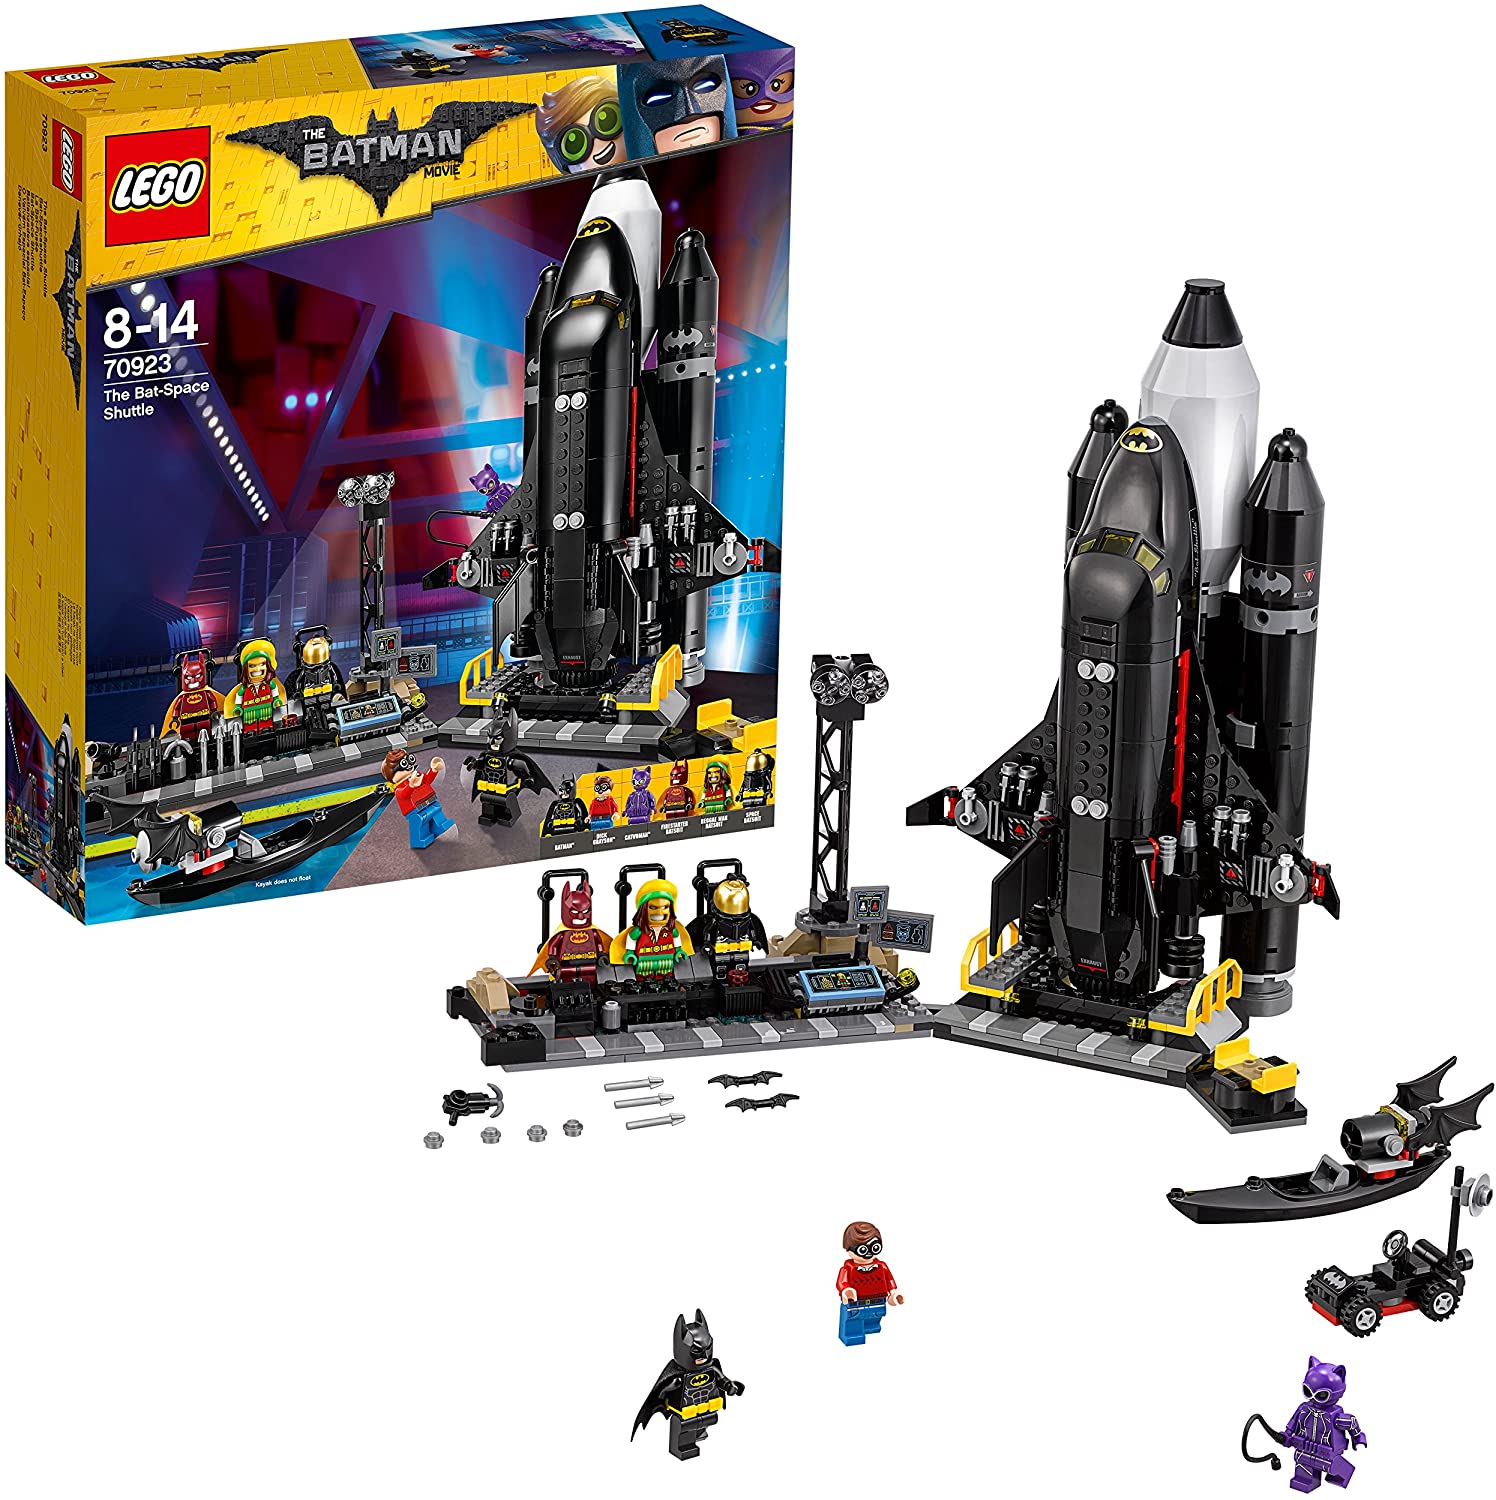 LEGO バットマン ザ・ムービー Bat-Space Shuttle 70923